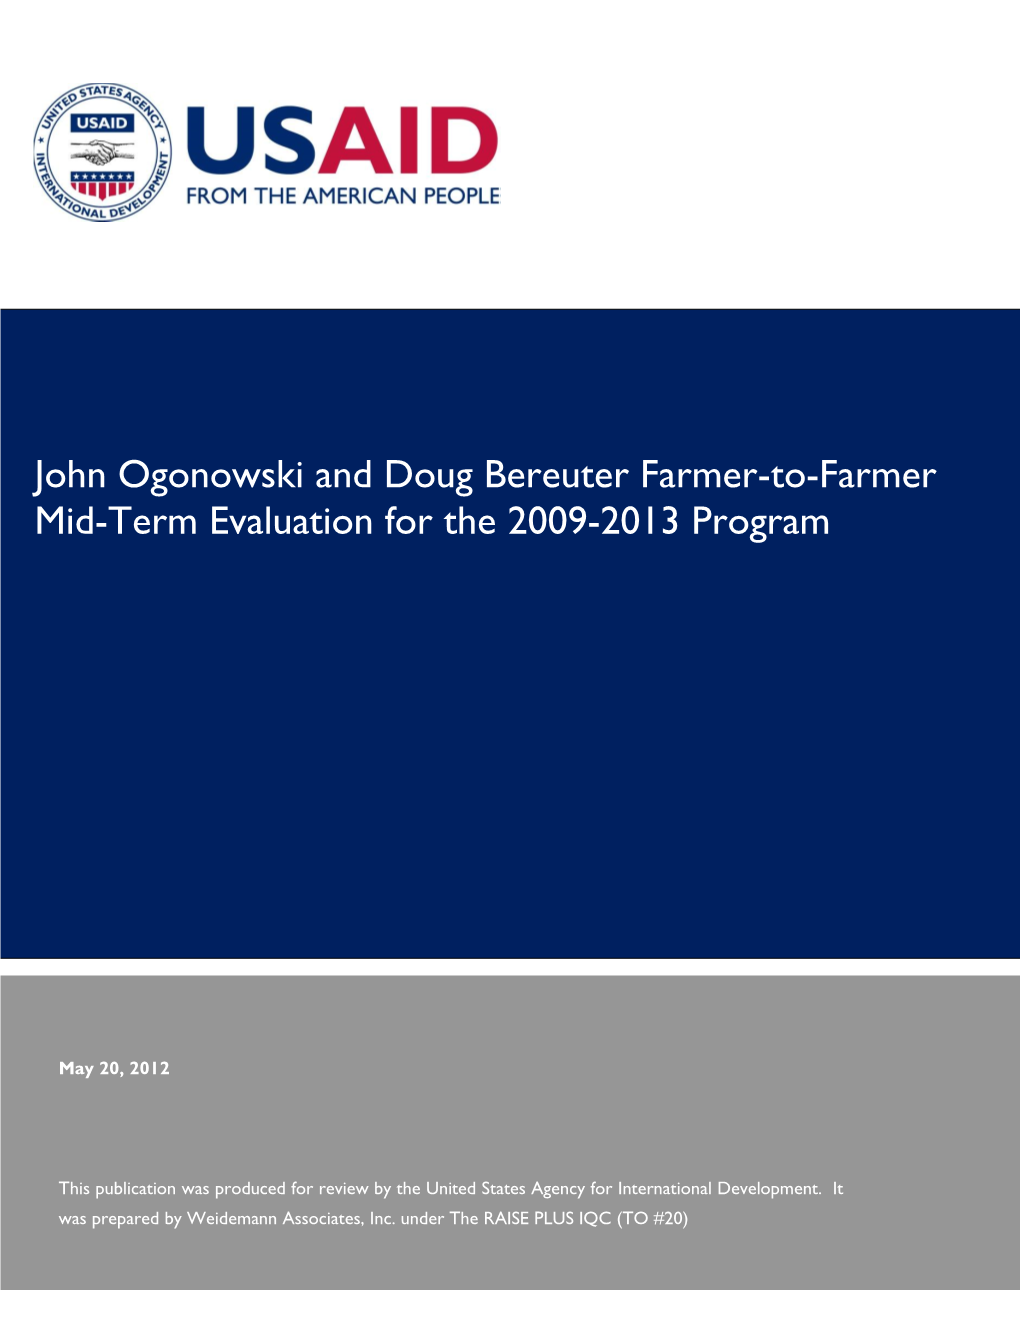 John Ogonowski and Doug Bereuter Farmer-To-Farmer Mid-Term Evaluation for the 2009-2013 Program